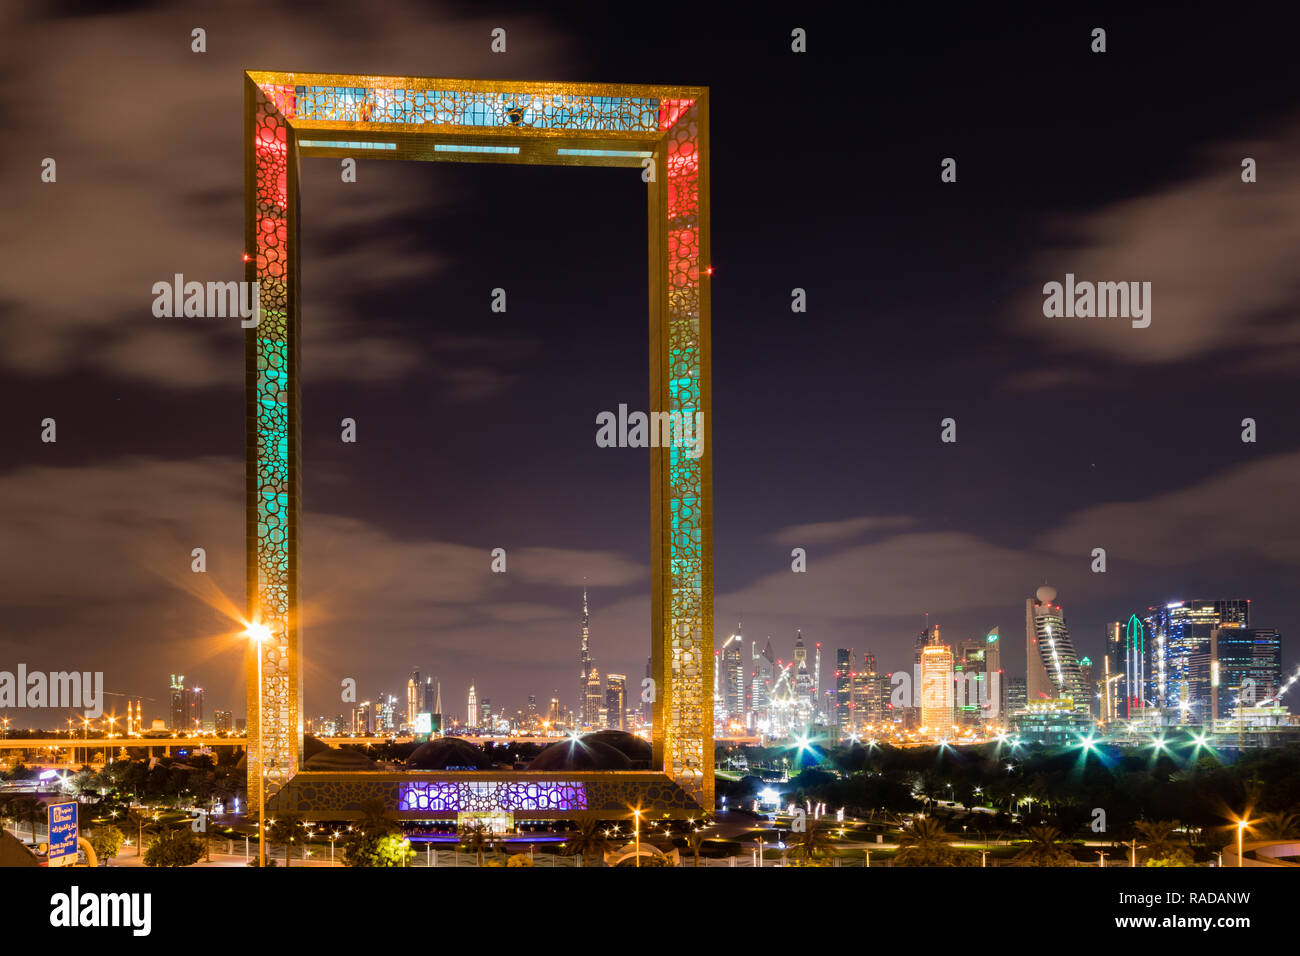 Dubai skyline and the Frame at night Stock Photo